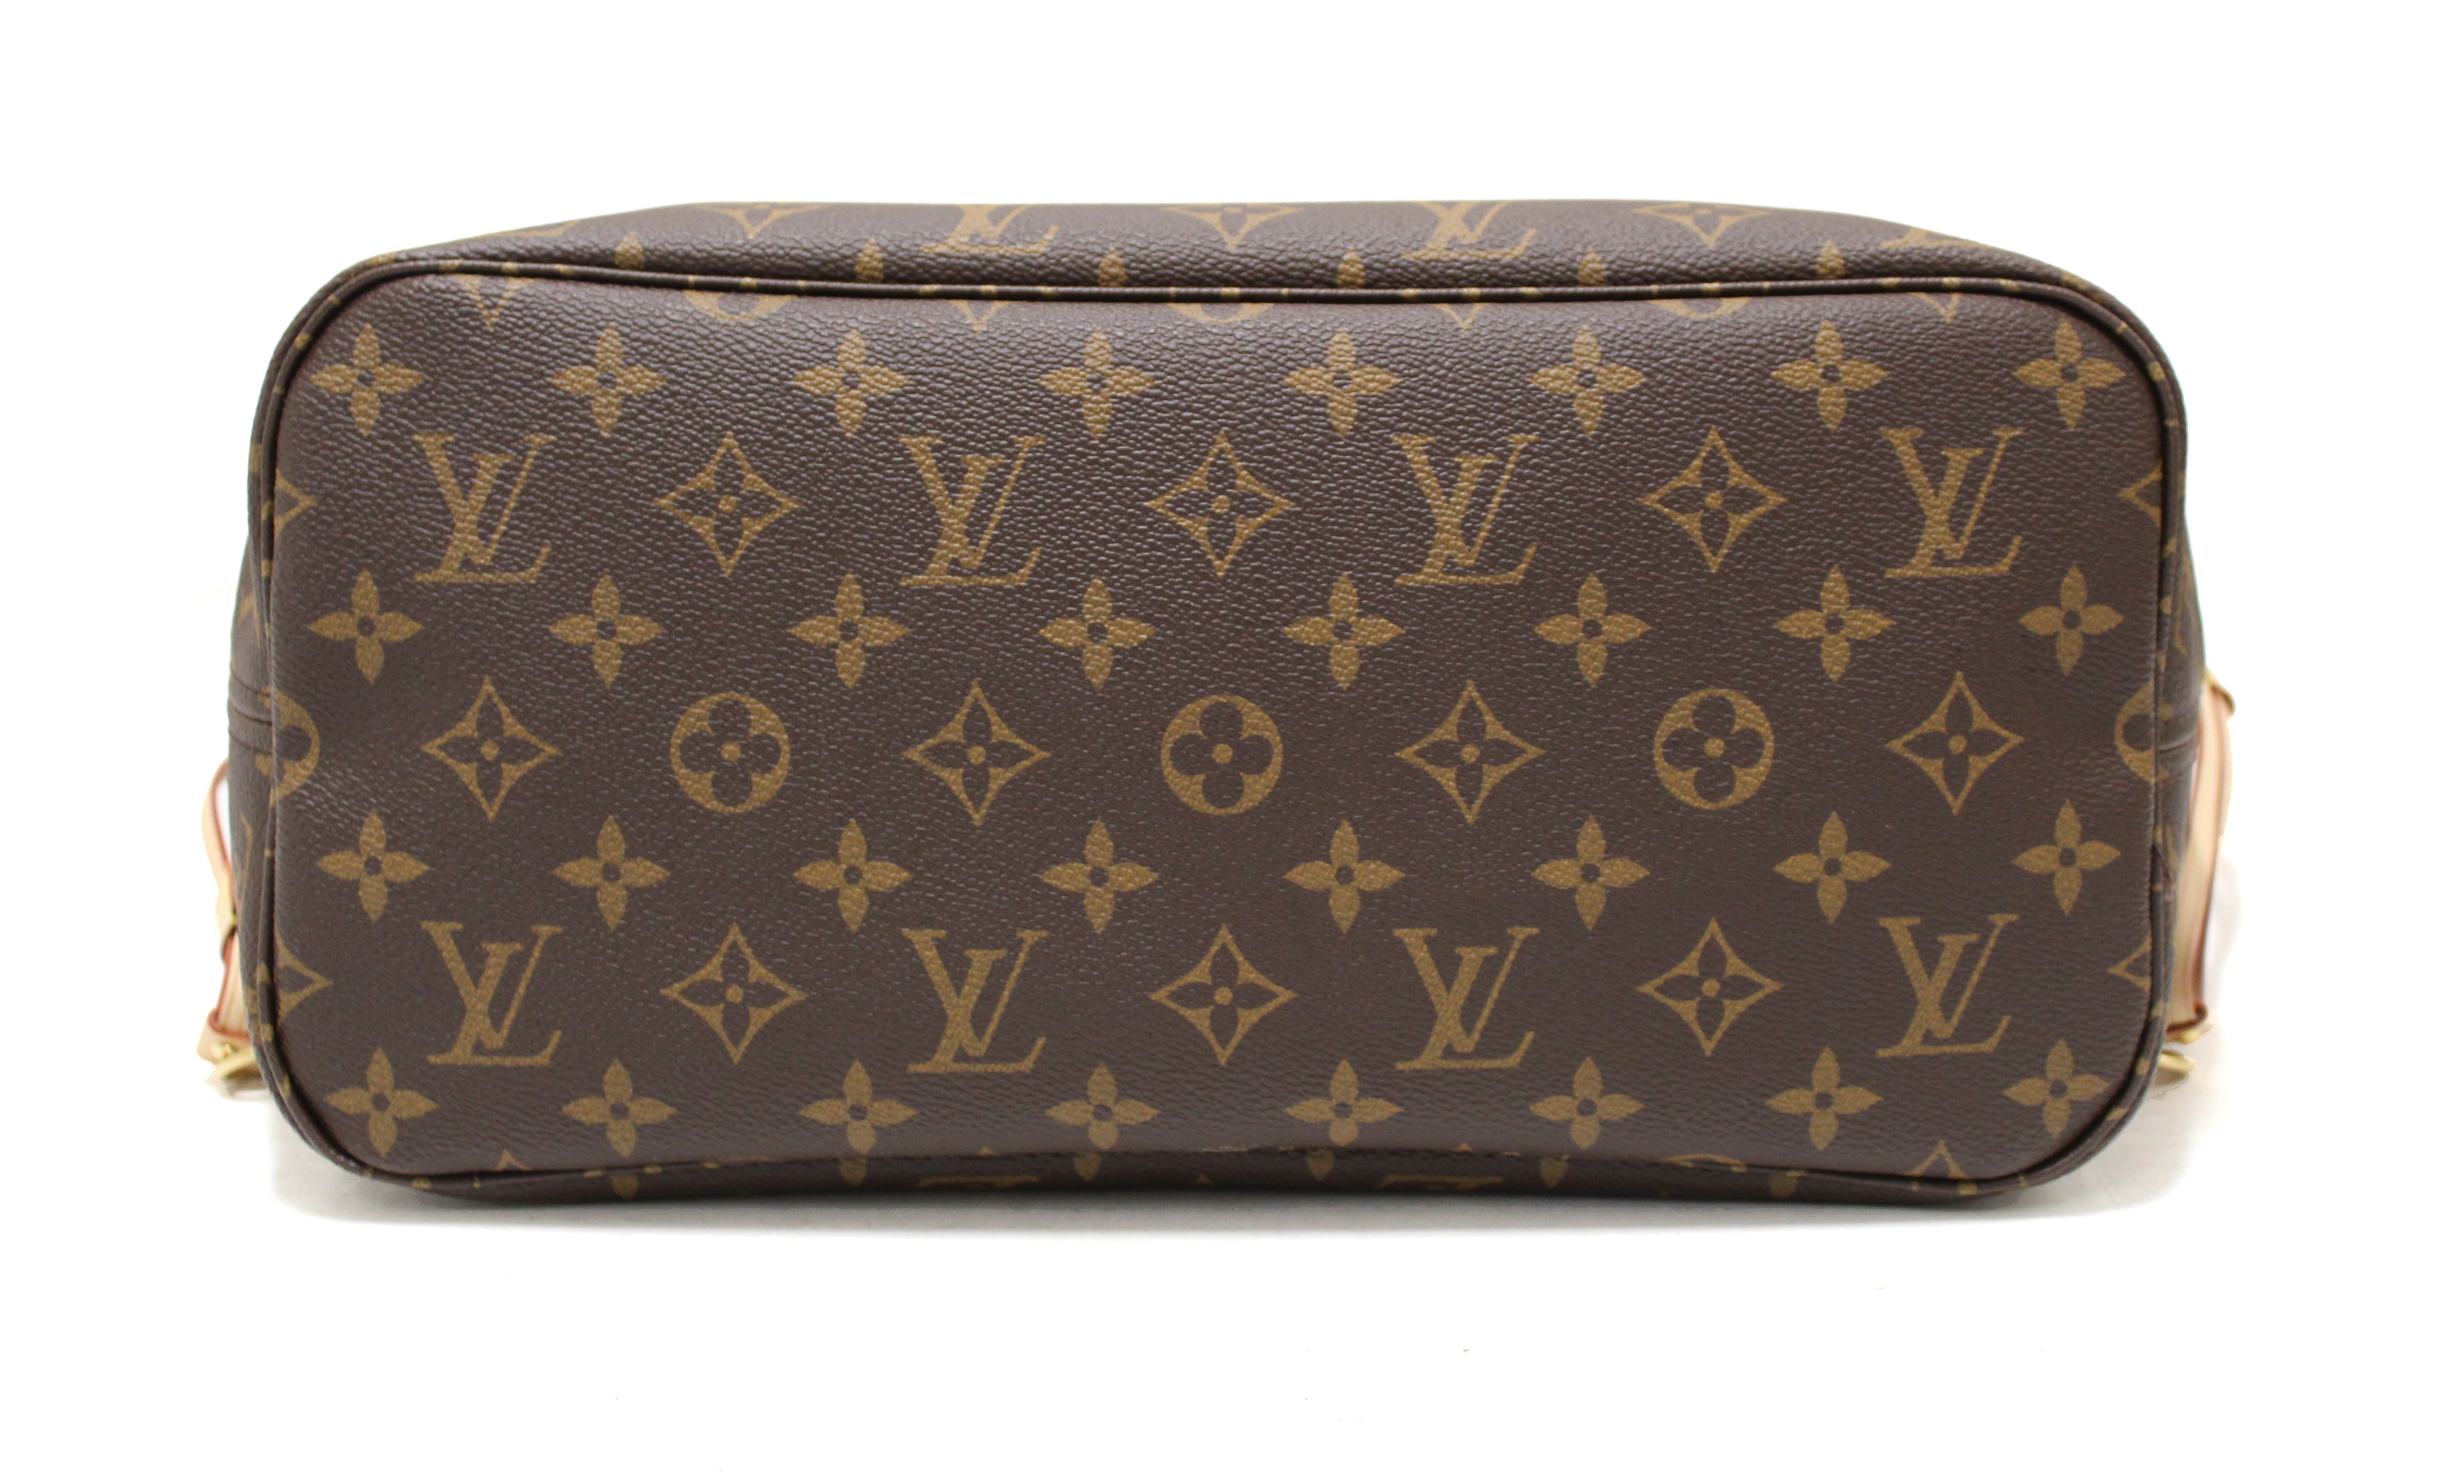 Authentic Brand New Louis Vuitton Neverfull Monogram MM Fuchsia Shoulder Tote Bag